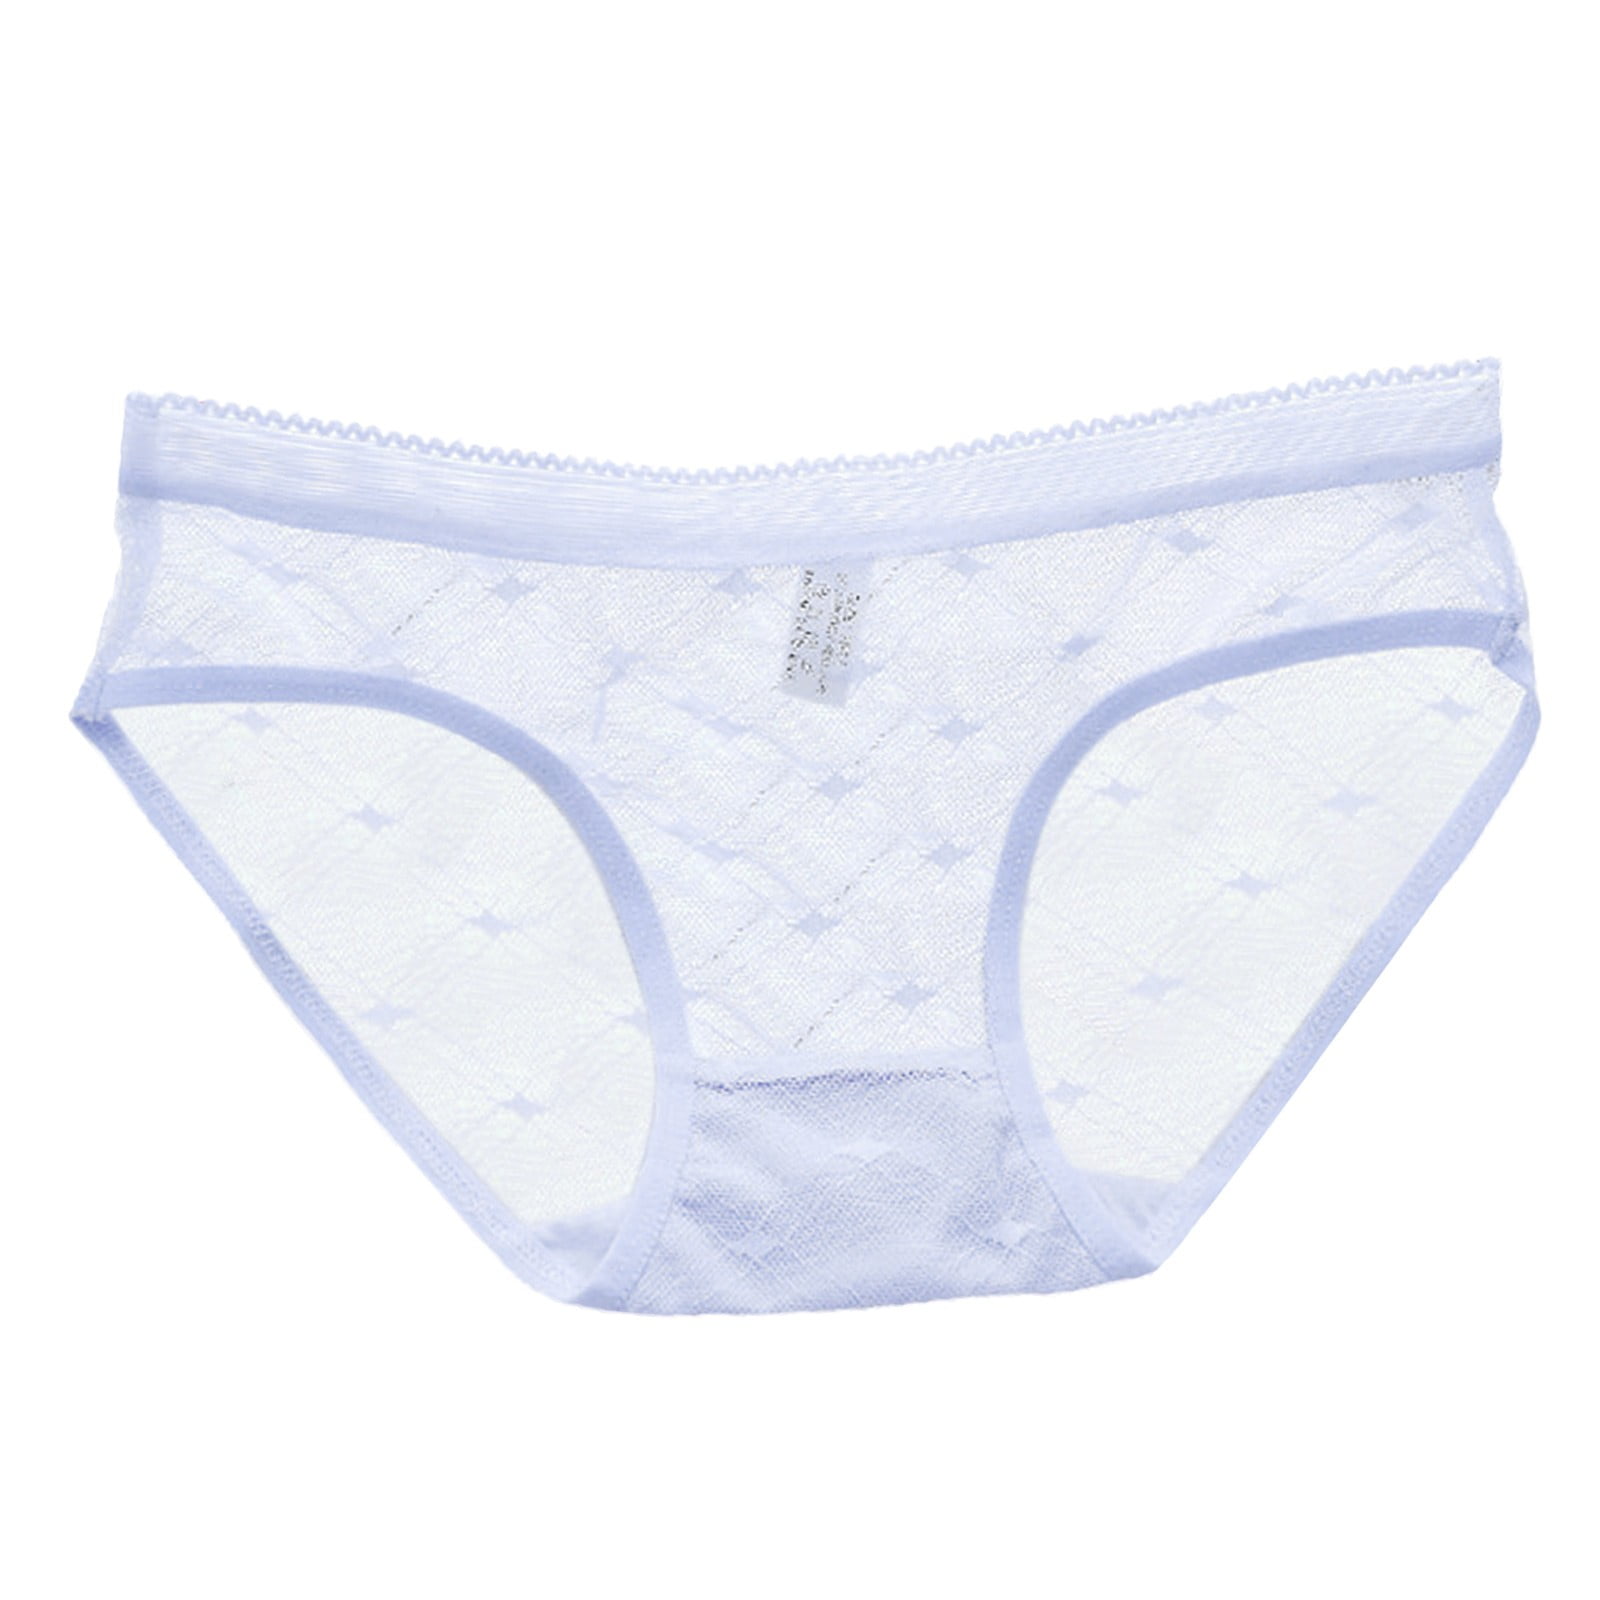 Underwear Women Sheer Lace See Through Mesh Cotton Crotch Seamless Briefs  Womens Panties 